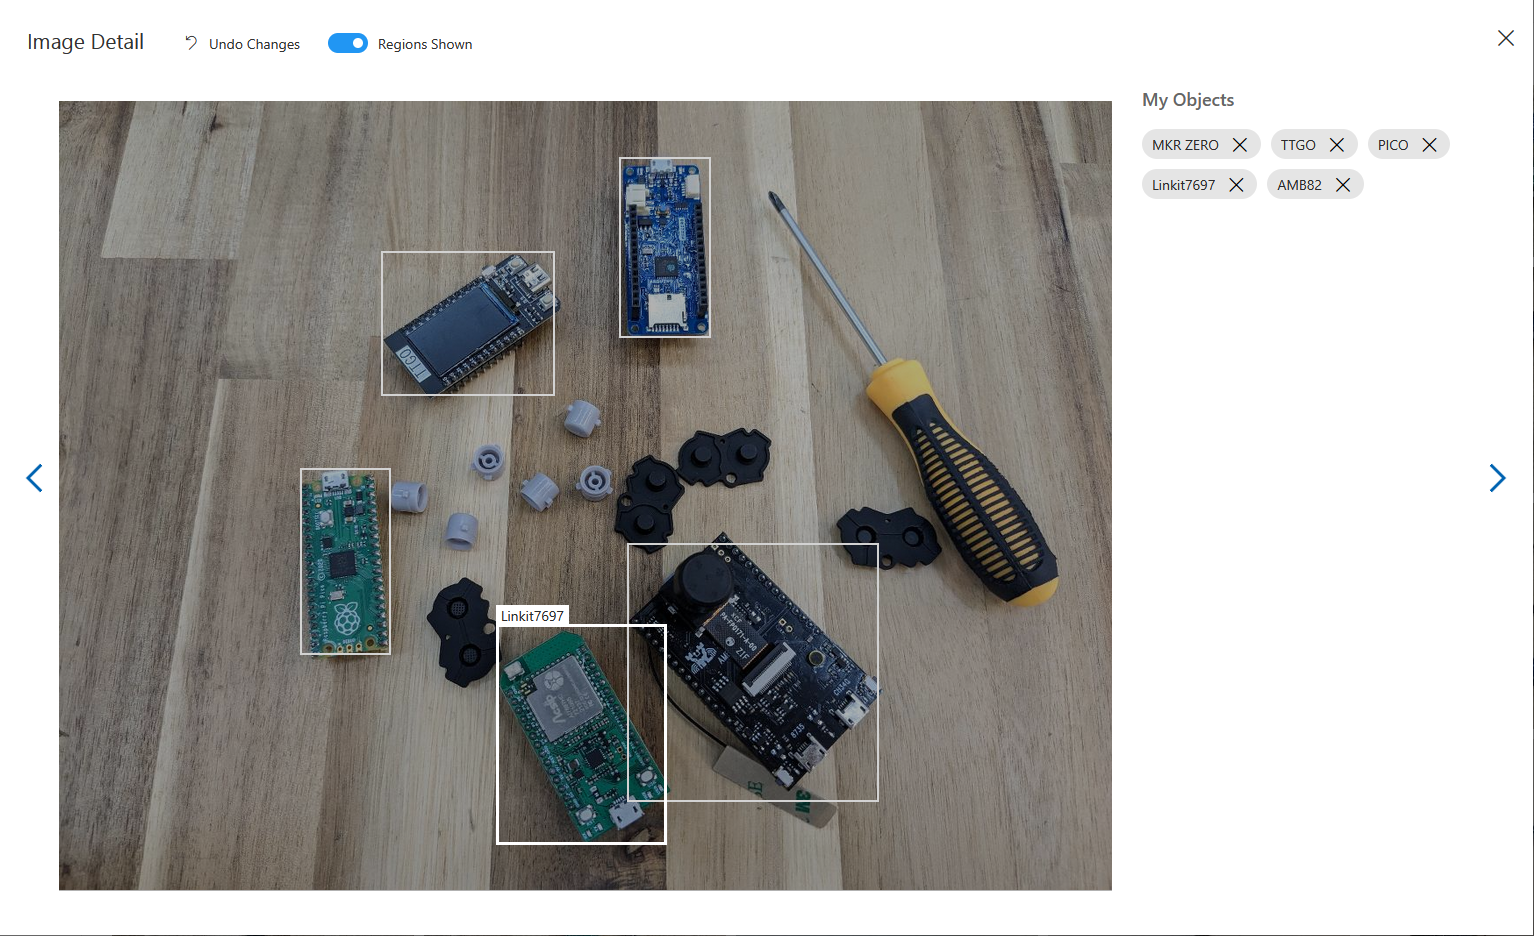 Maker 玩 AI 系列(九)：Azure Custom Vision － AutoML 物件偵測輕鬆玩